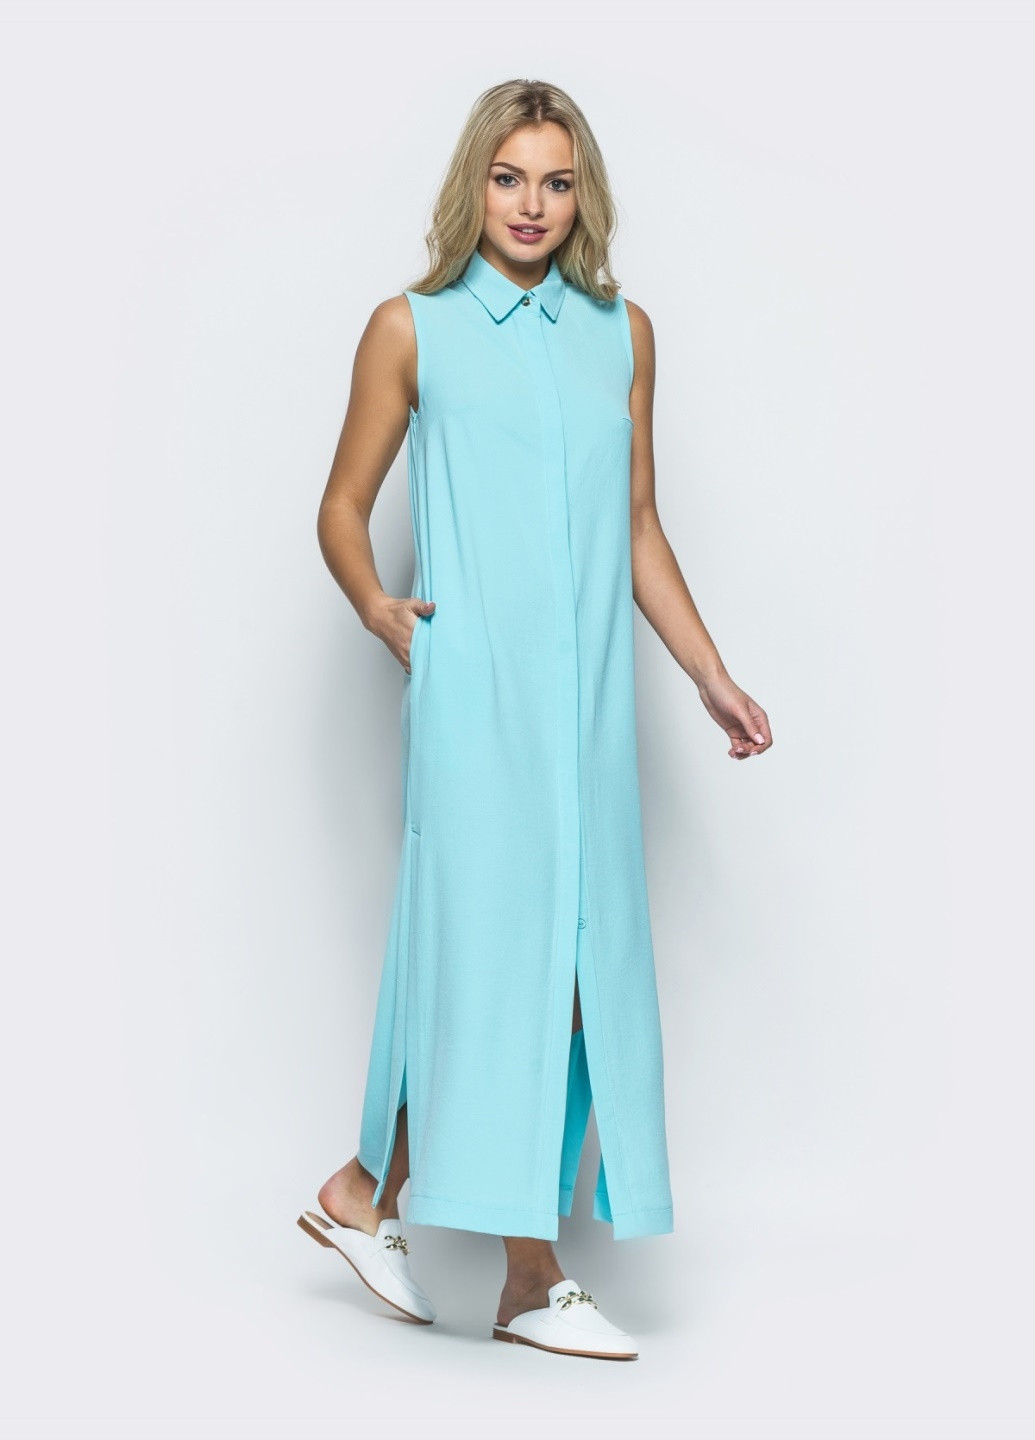 Блакитна синє плаття-халат з прорізними кишенями Dressa